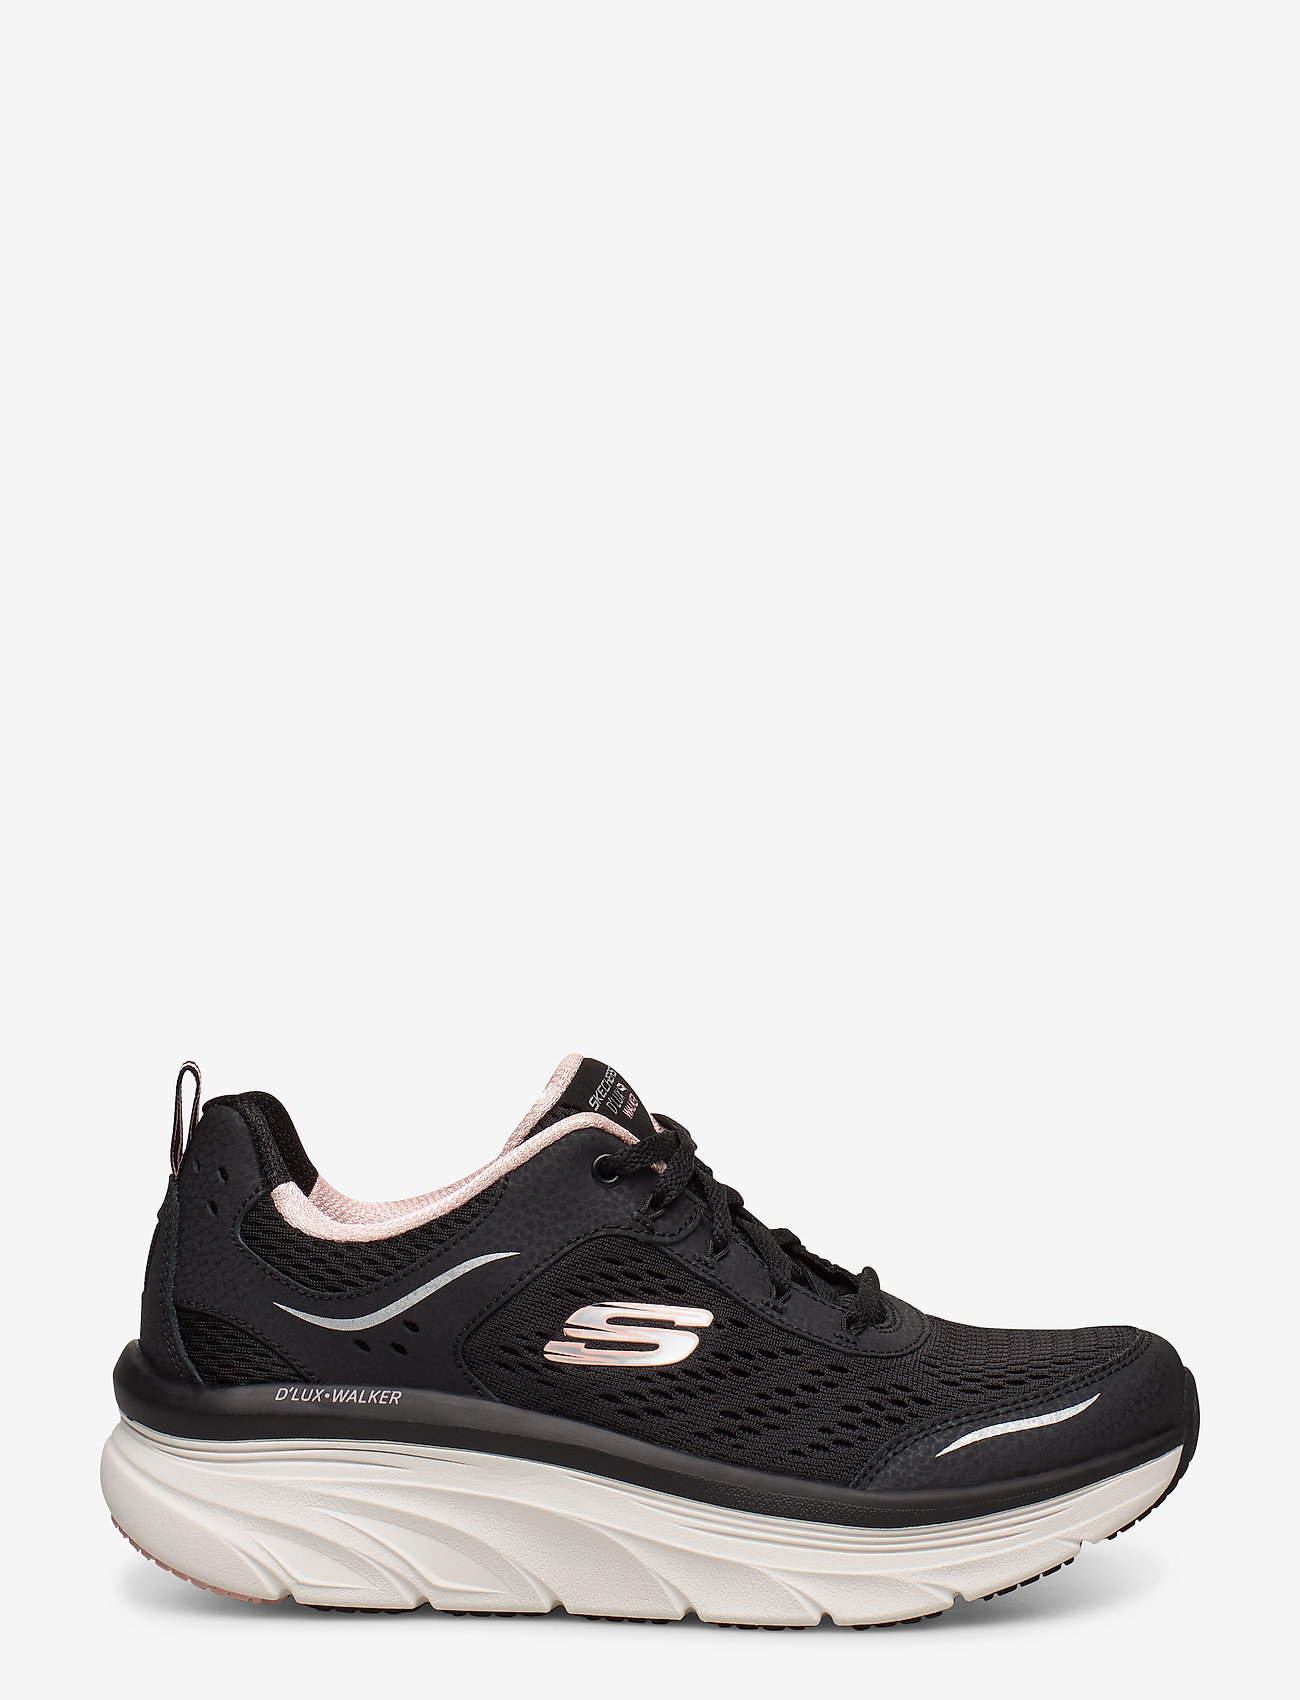 Skechers - Womens Relaxed Fit: D'Lux Walker - Infinite Motion - sneakers med lavt skaft - bkpk black pink - 1